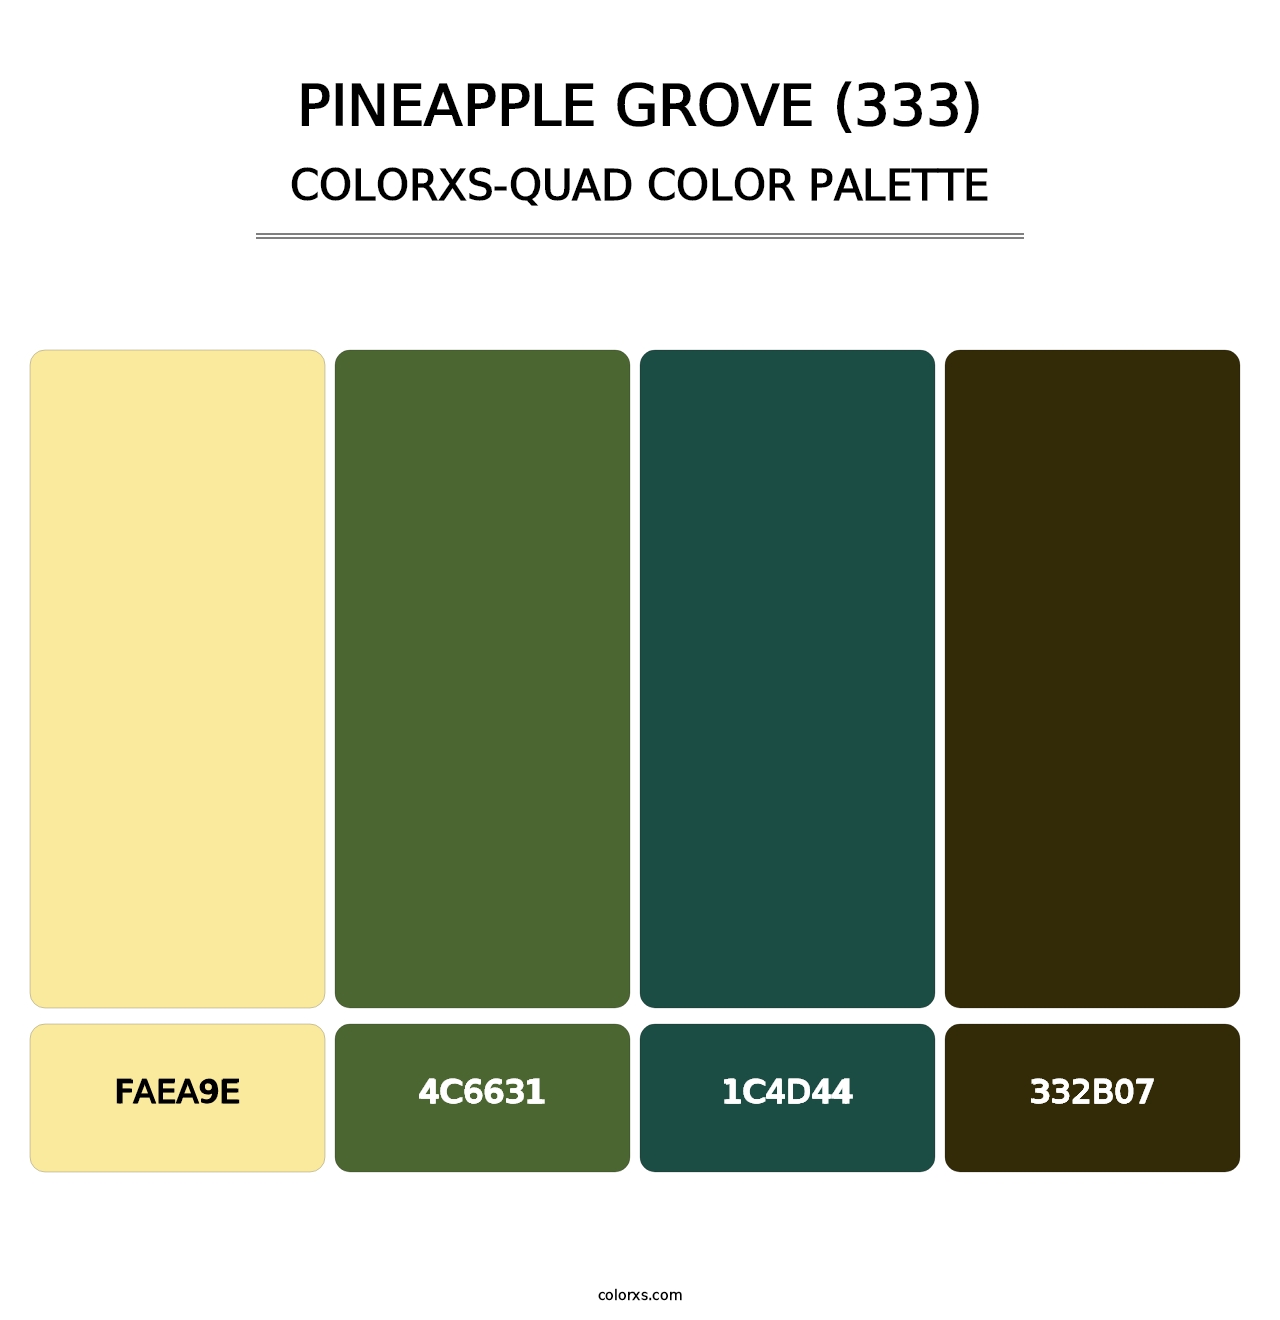 Pineapple Grove (333) - Colorxs Quad Palette